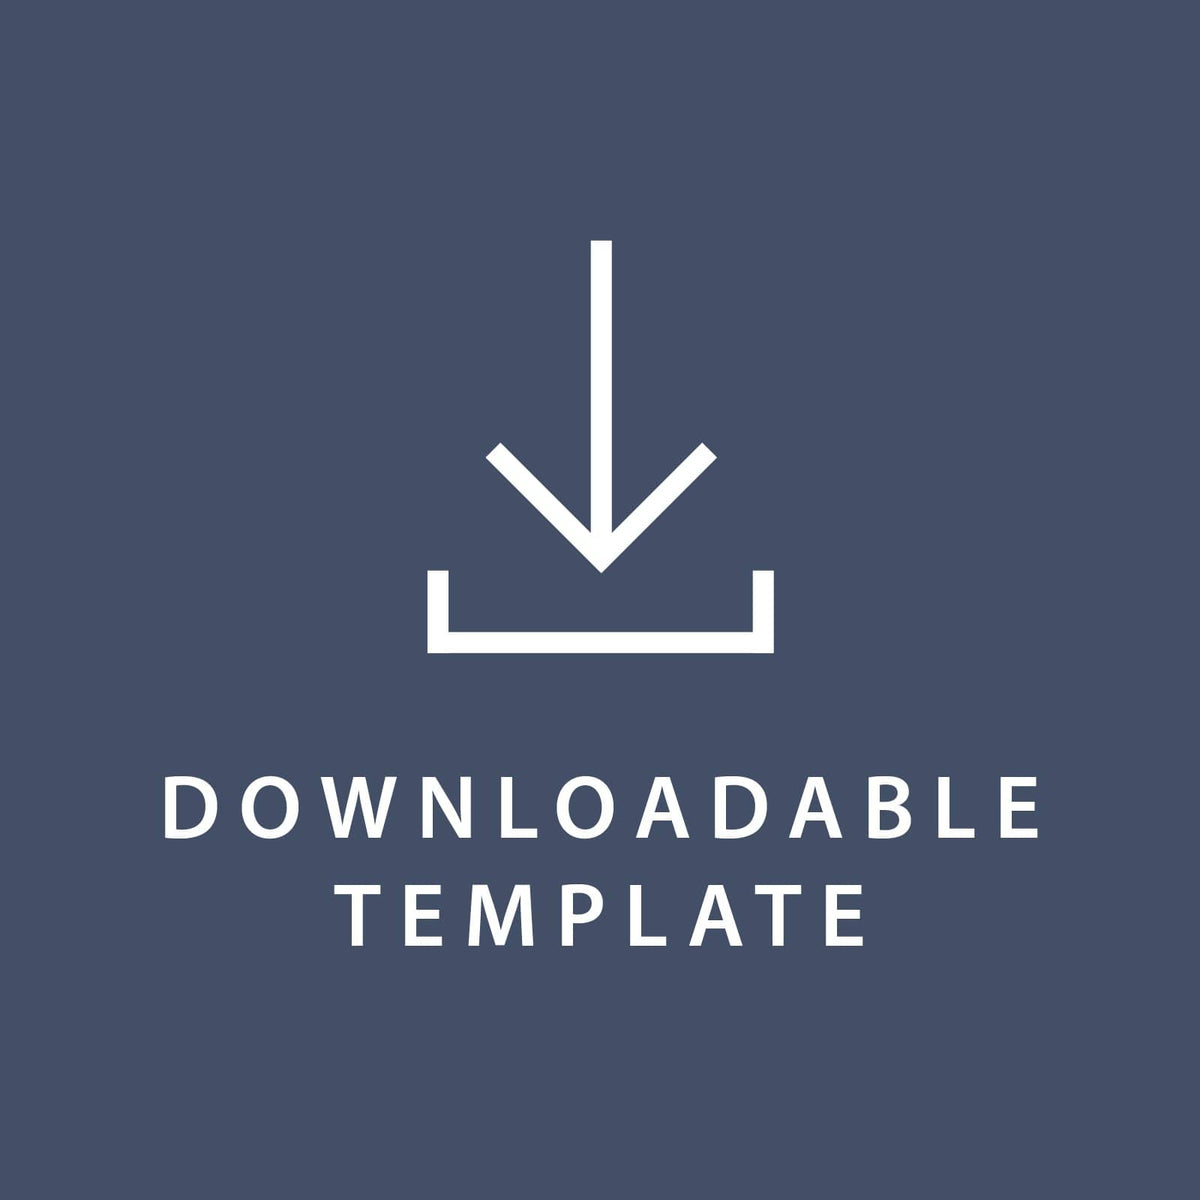 Template for 11 x 8.5 Certificates Gartner Studios Template tmplt0612